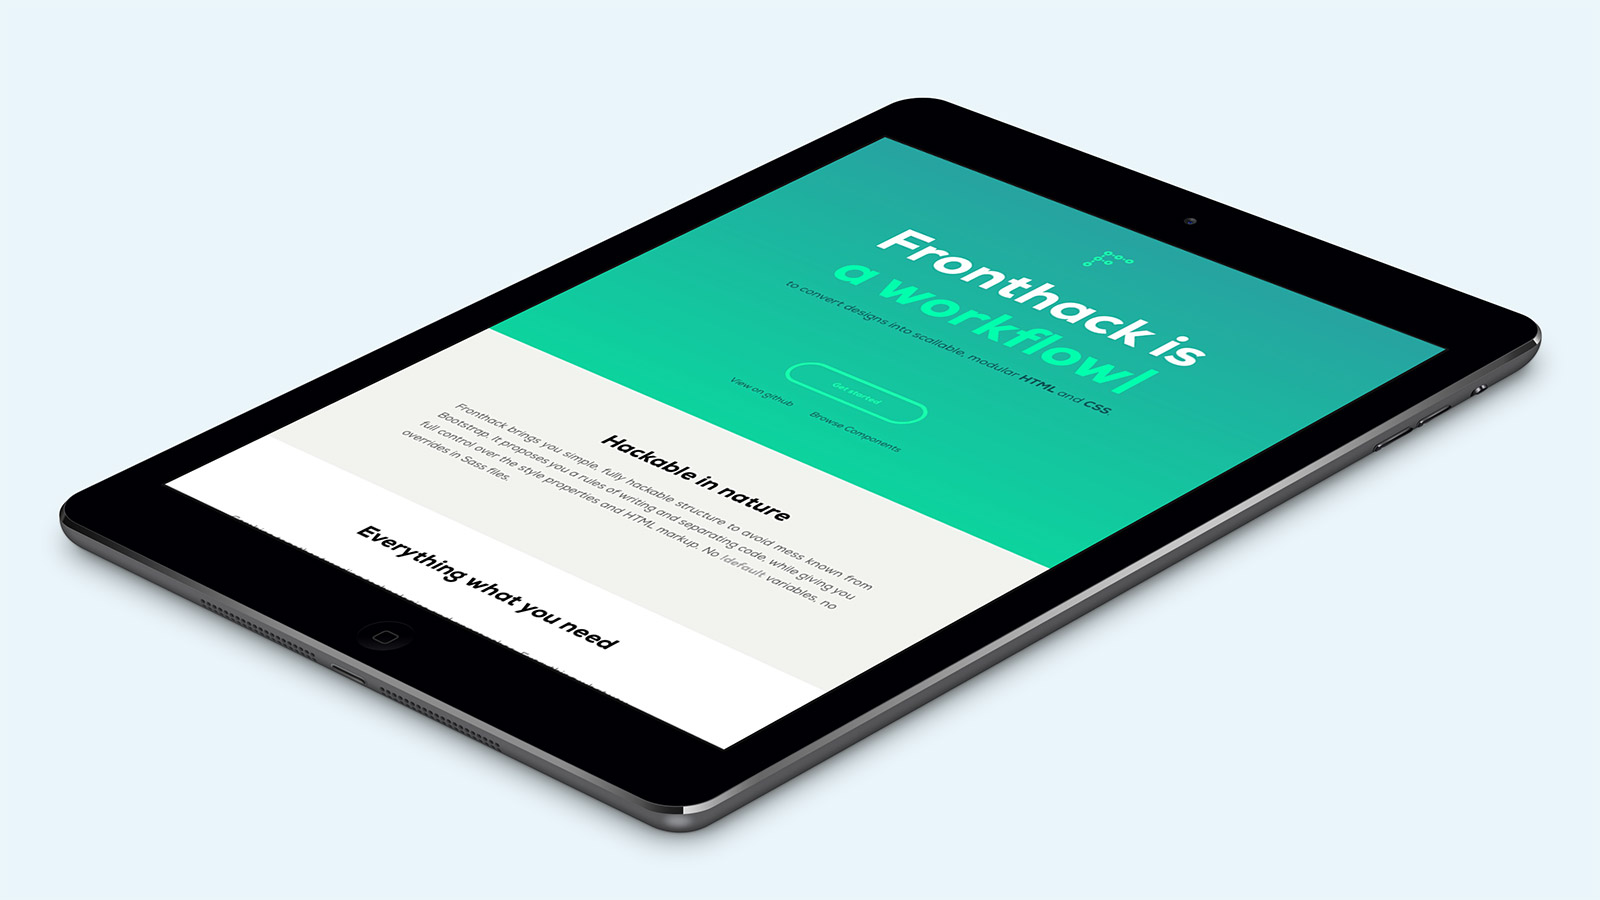 Fronthack | Responsive Web Design